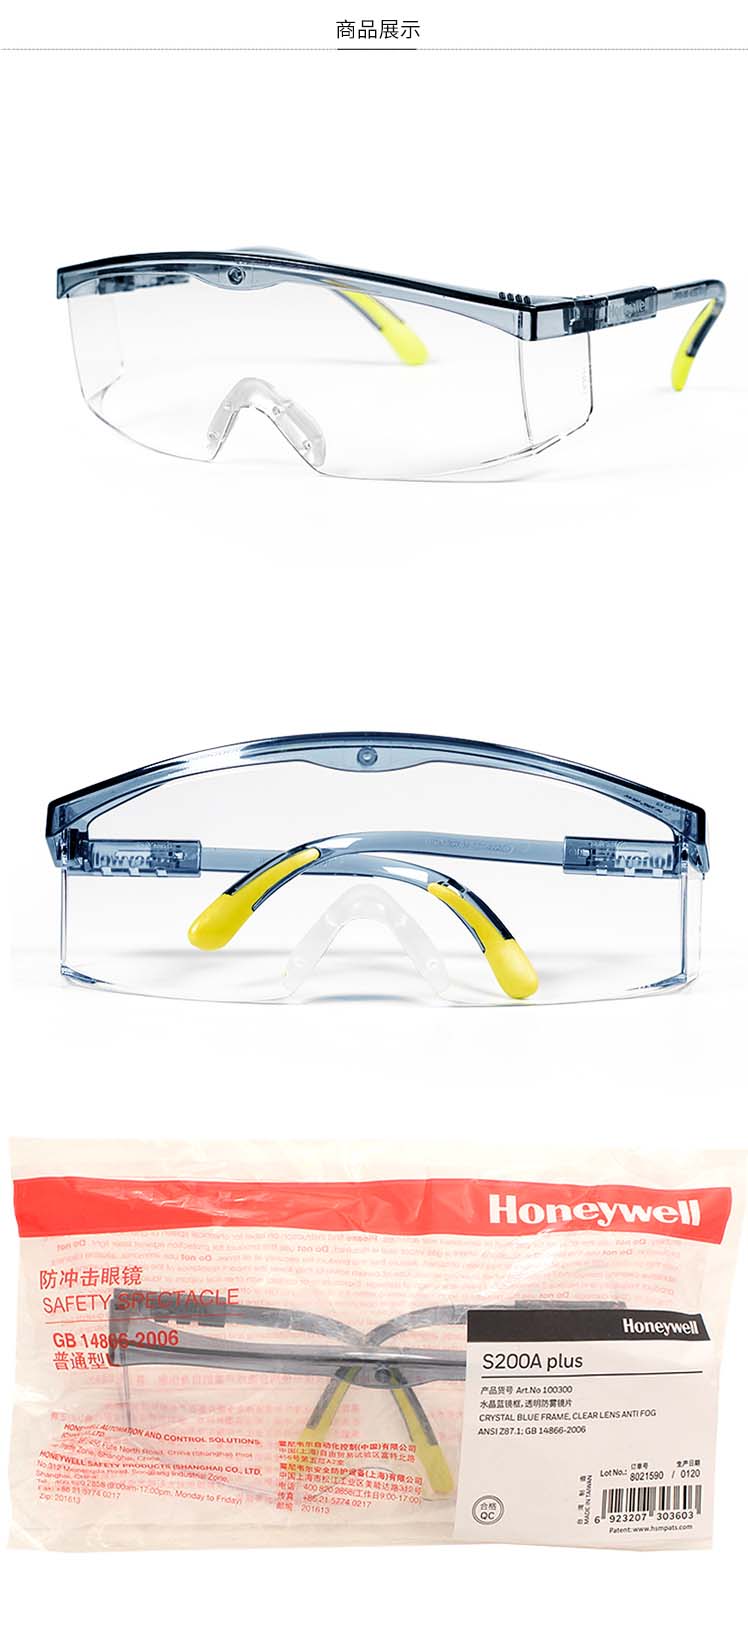 Honeywell霍尼韦尔100500S200A plus透明镜片蓝色镜框防刮擦防护眼镜图1